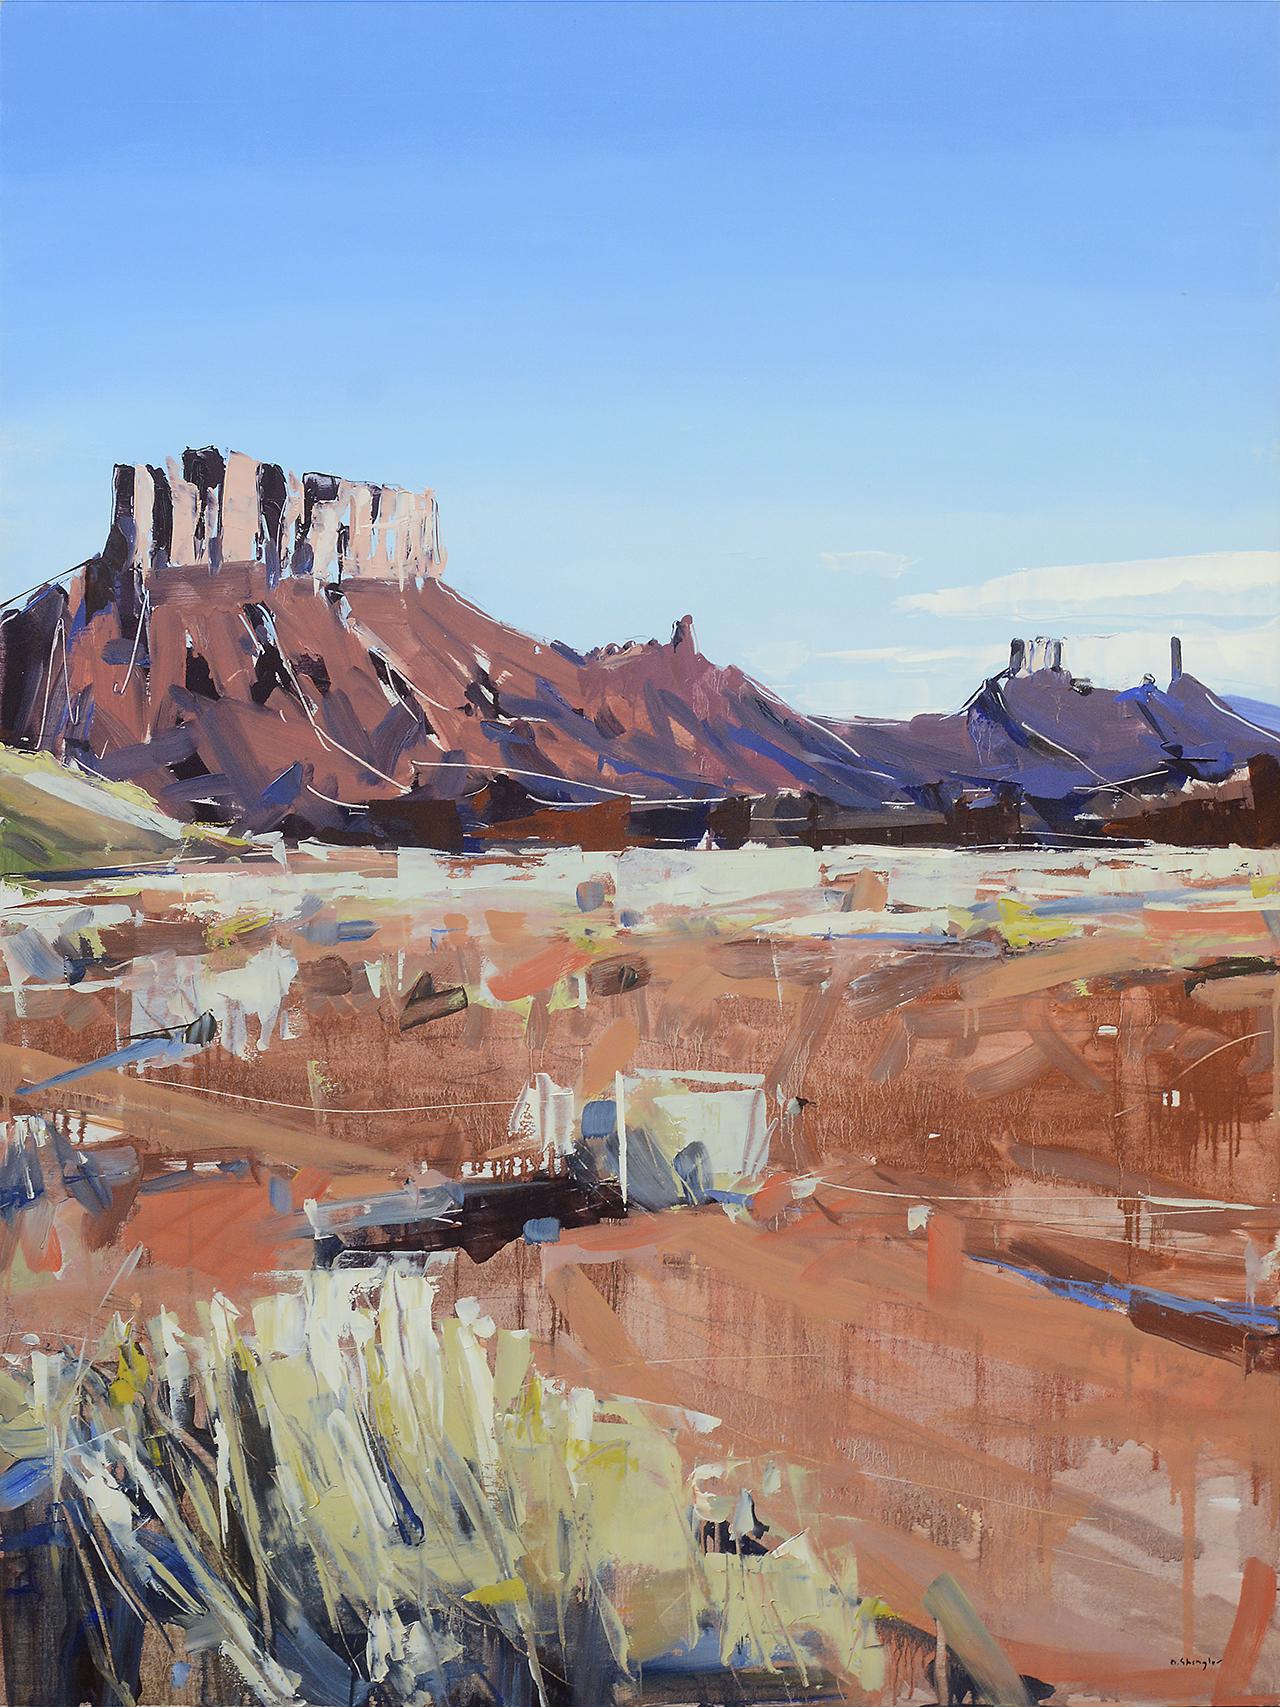 David Shingler Landscape Painting - "Moab Plateaus" Oil Painting